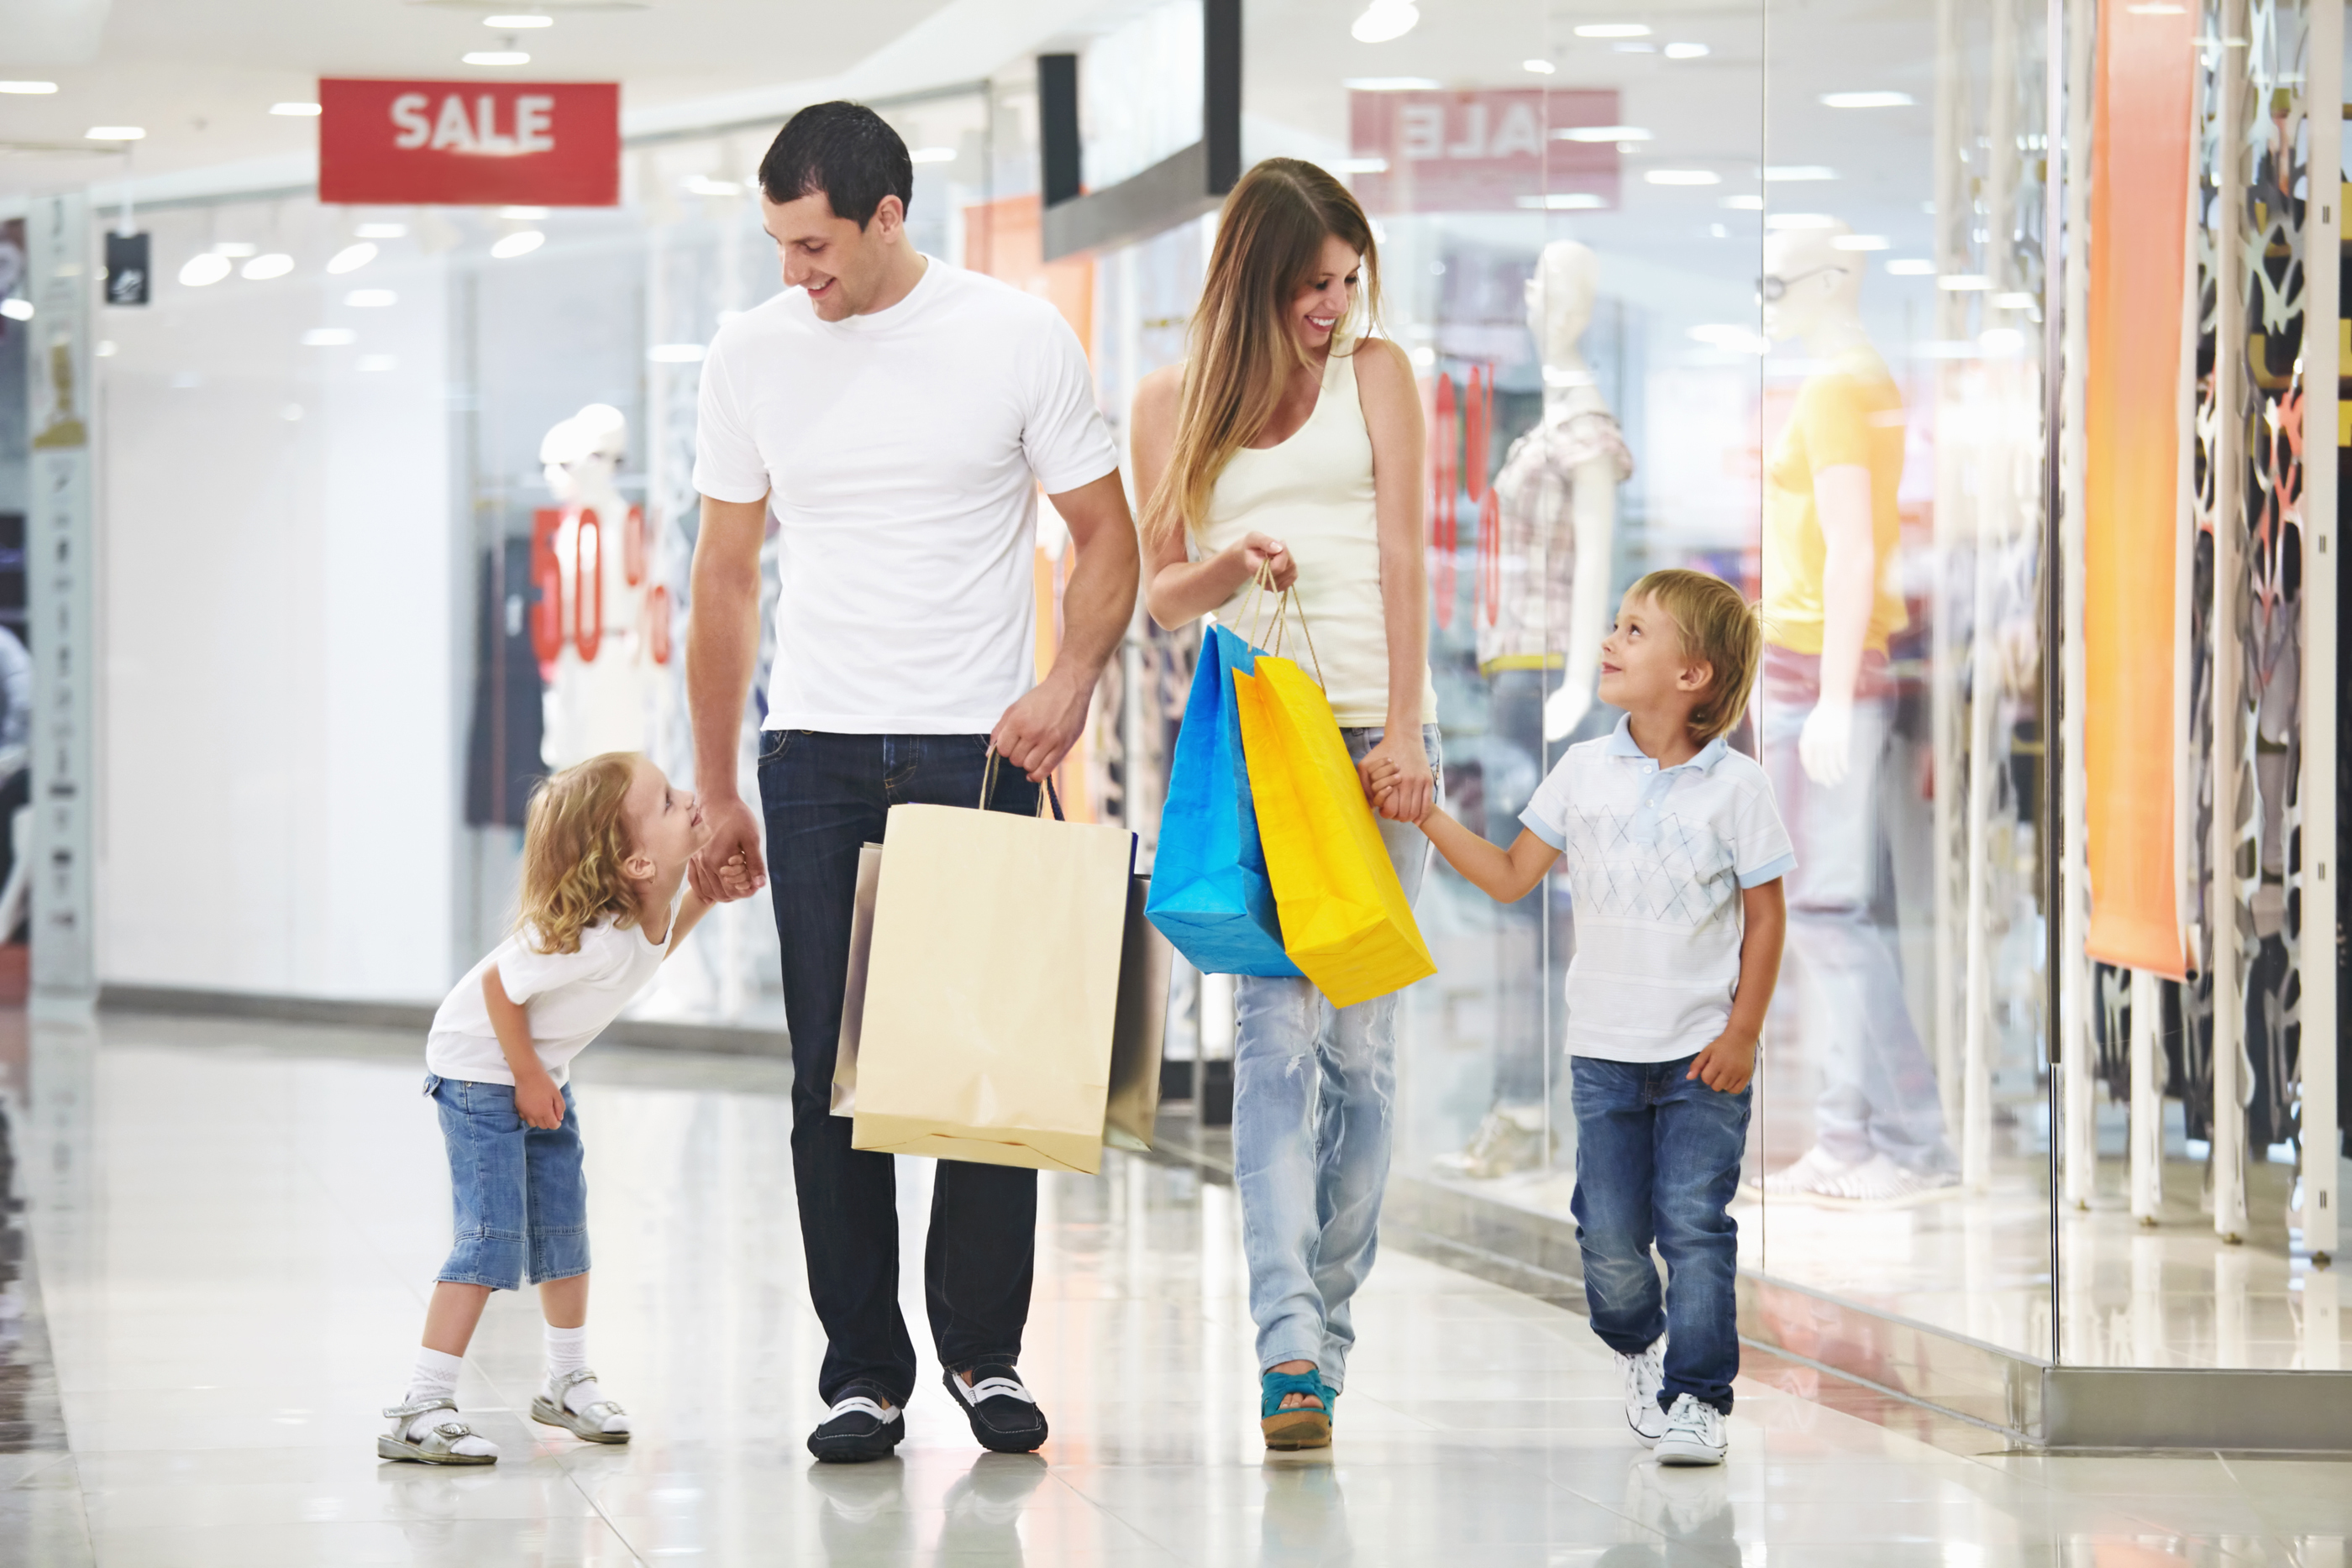 Go shopping mall. Одежда для всей семьи. Семья шоппинг. Дети шоппинг. Семья с детьми в магазине.